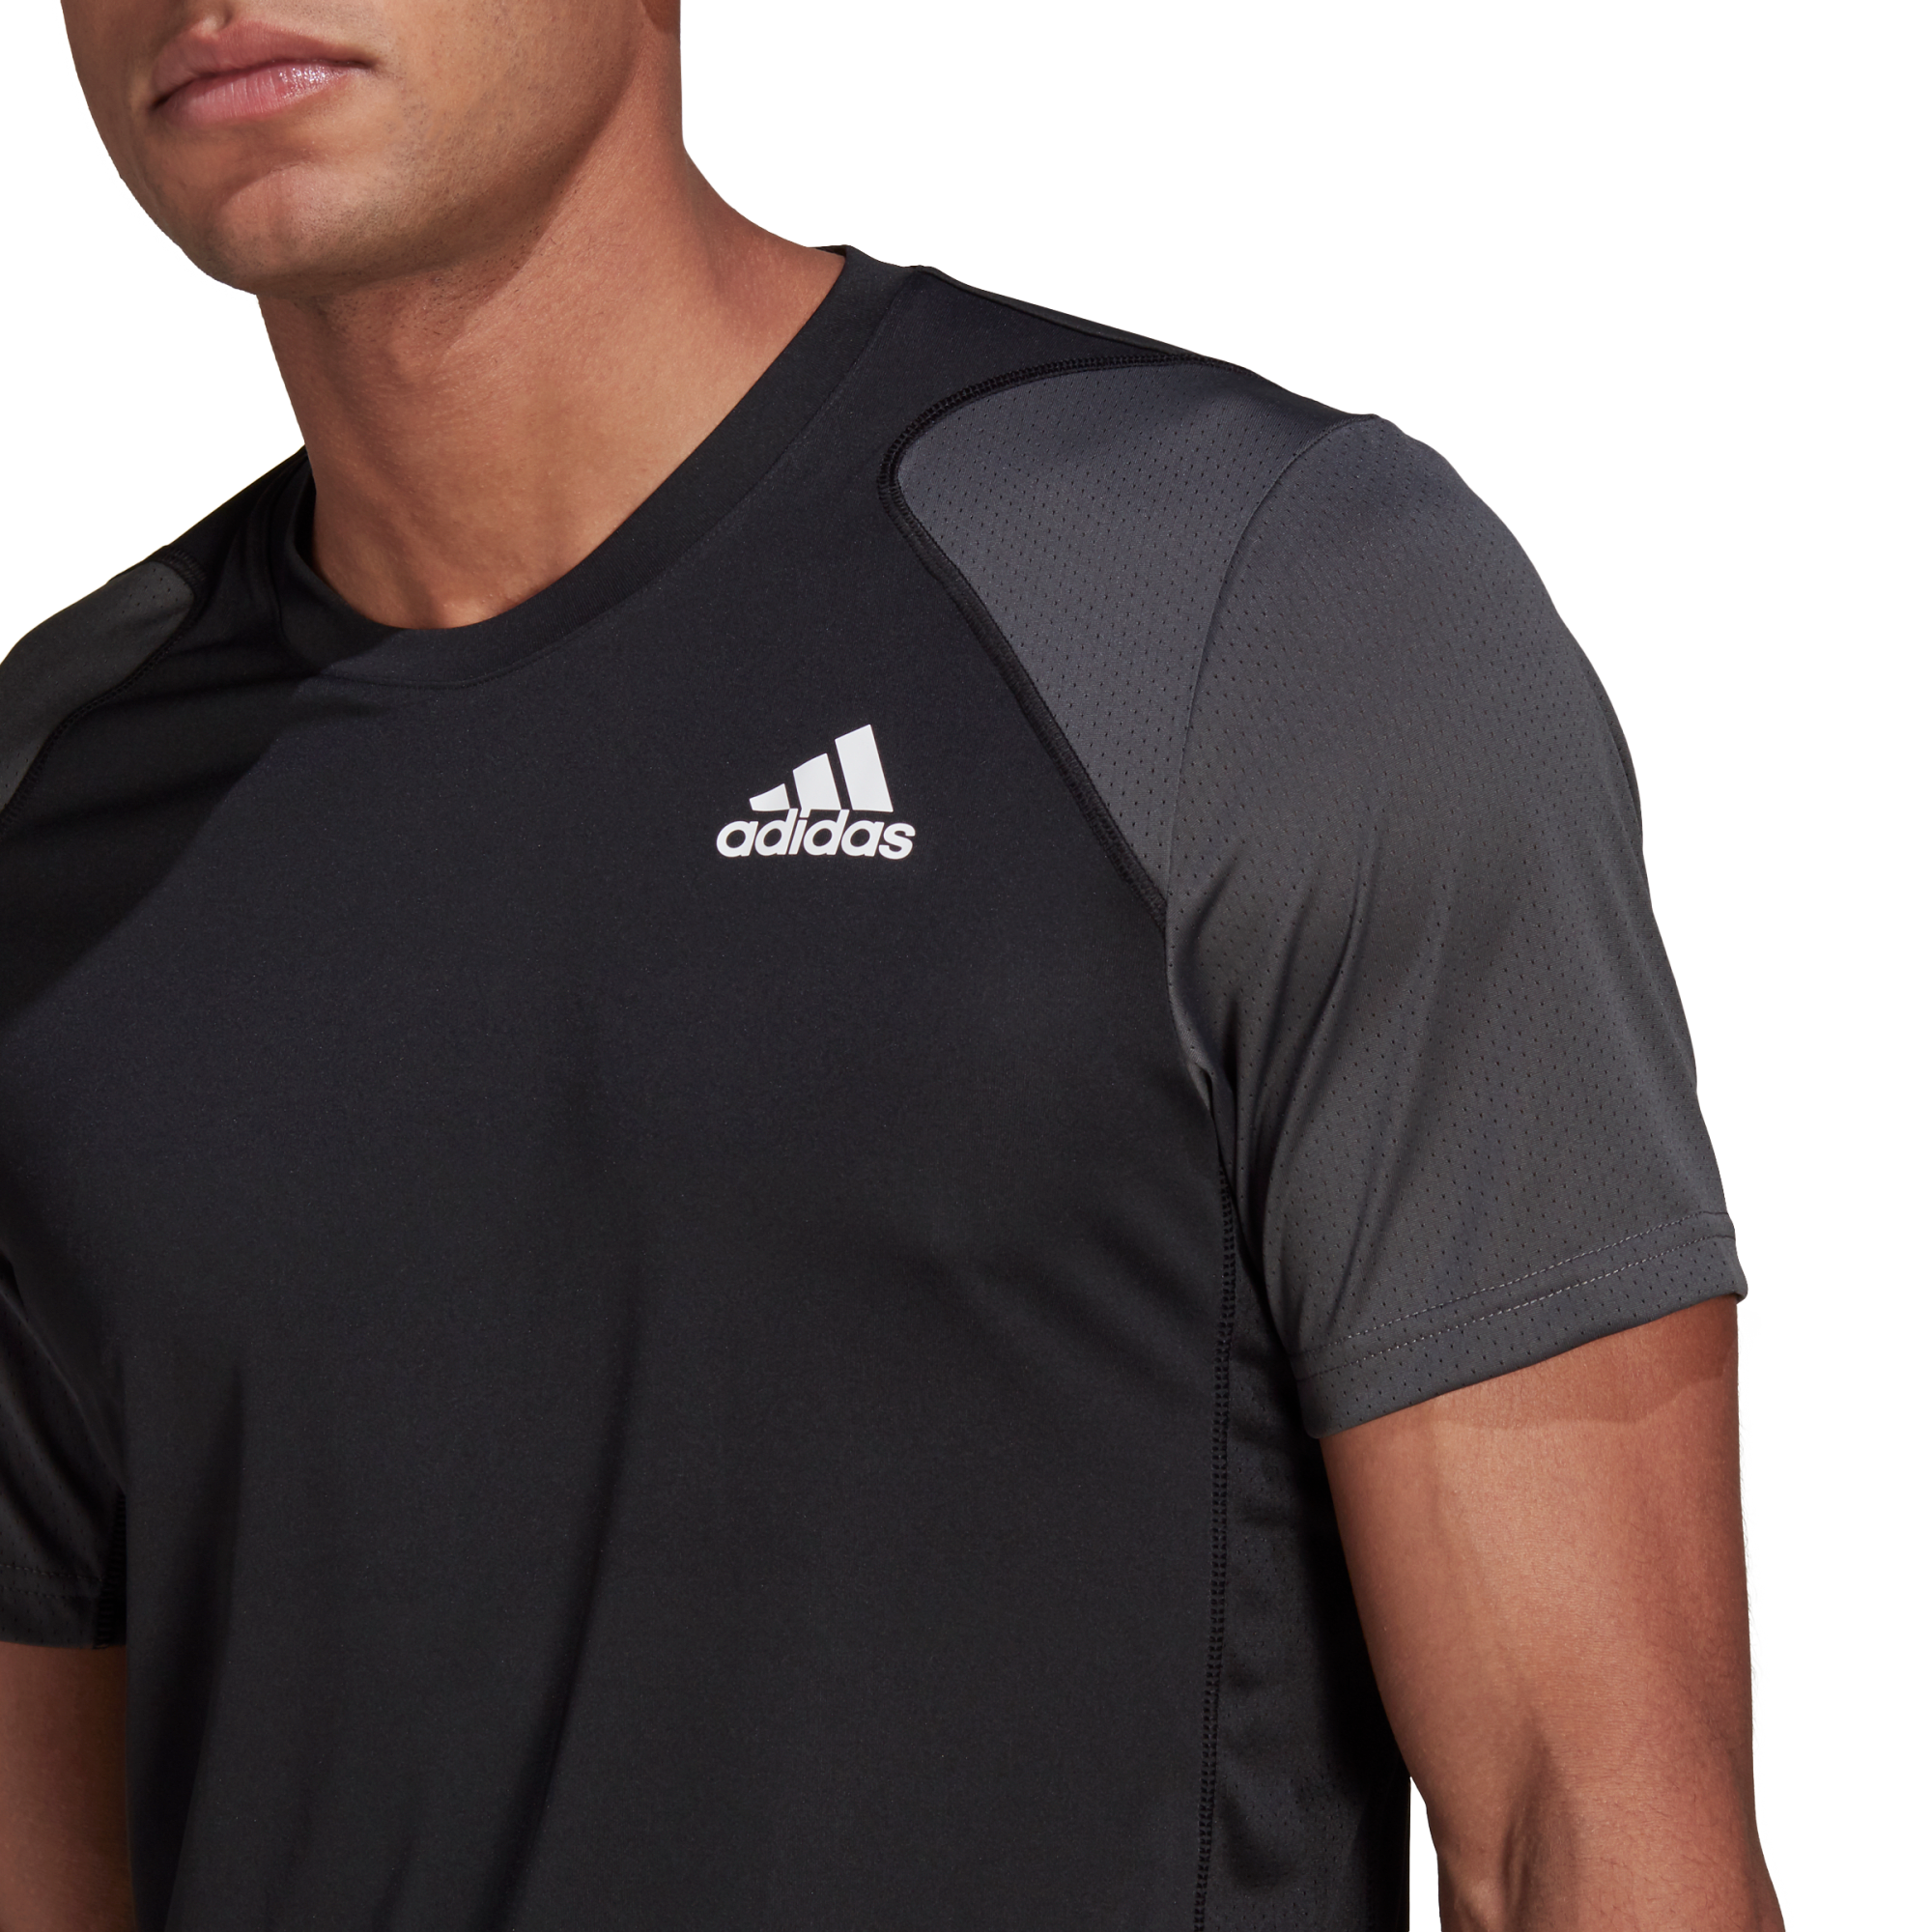 Club Tennis Men's Colorblock T-Shirt